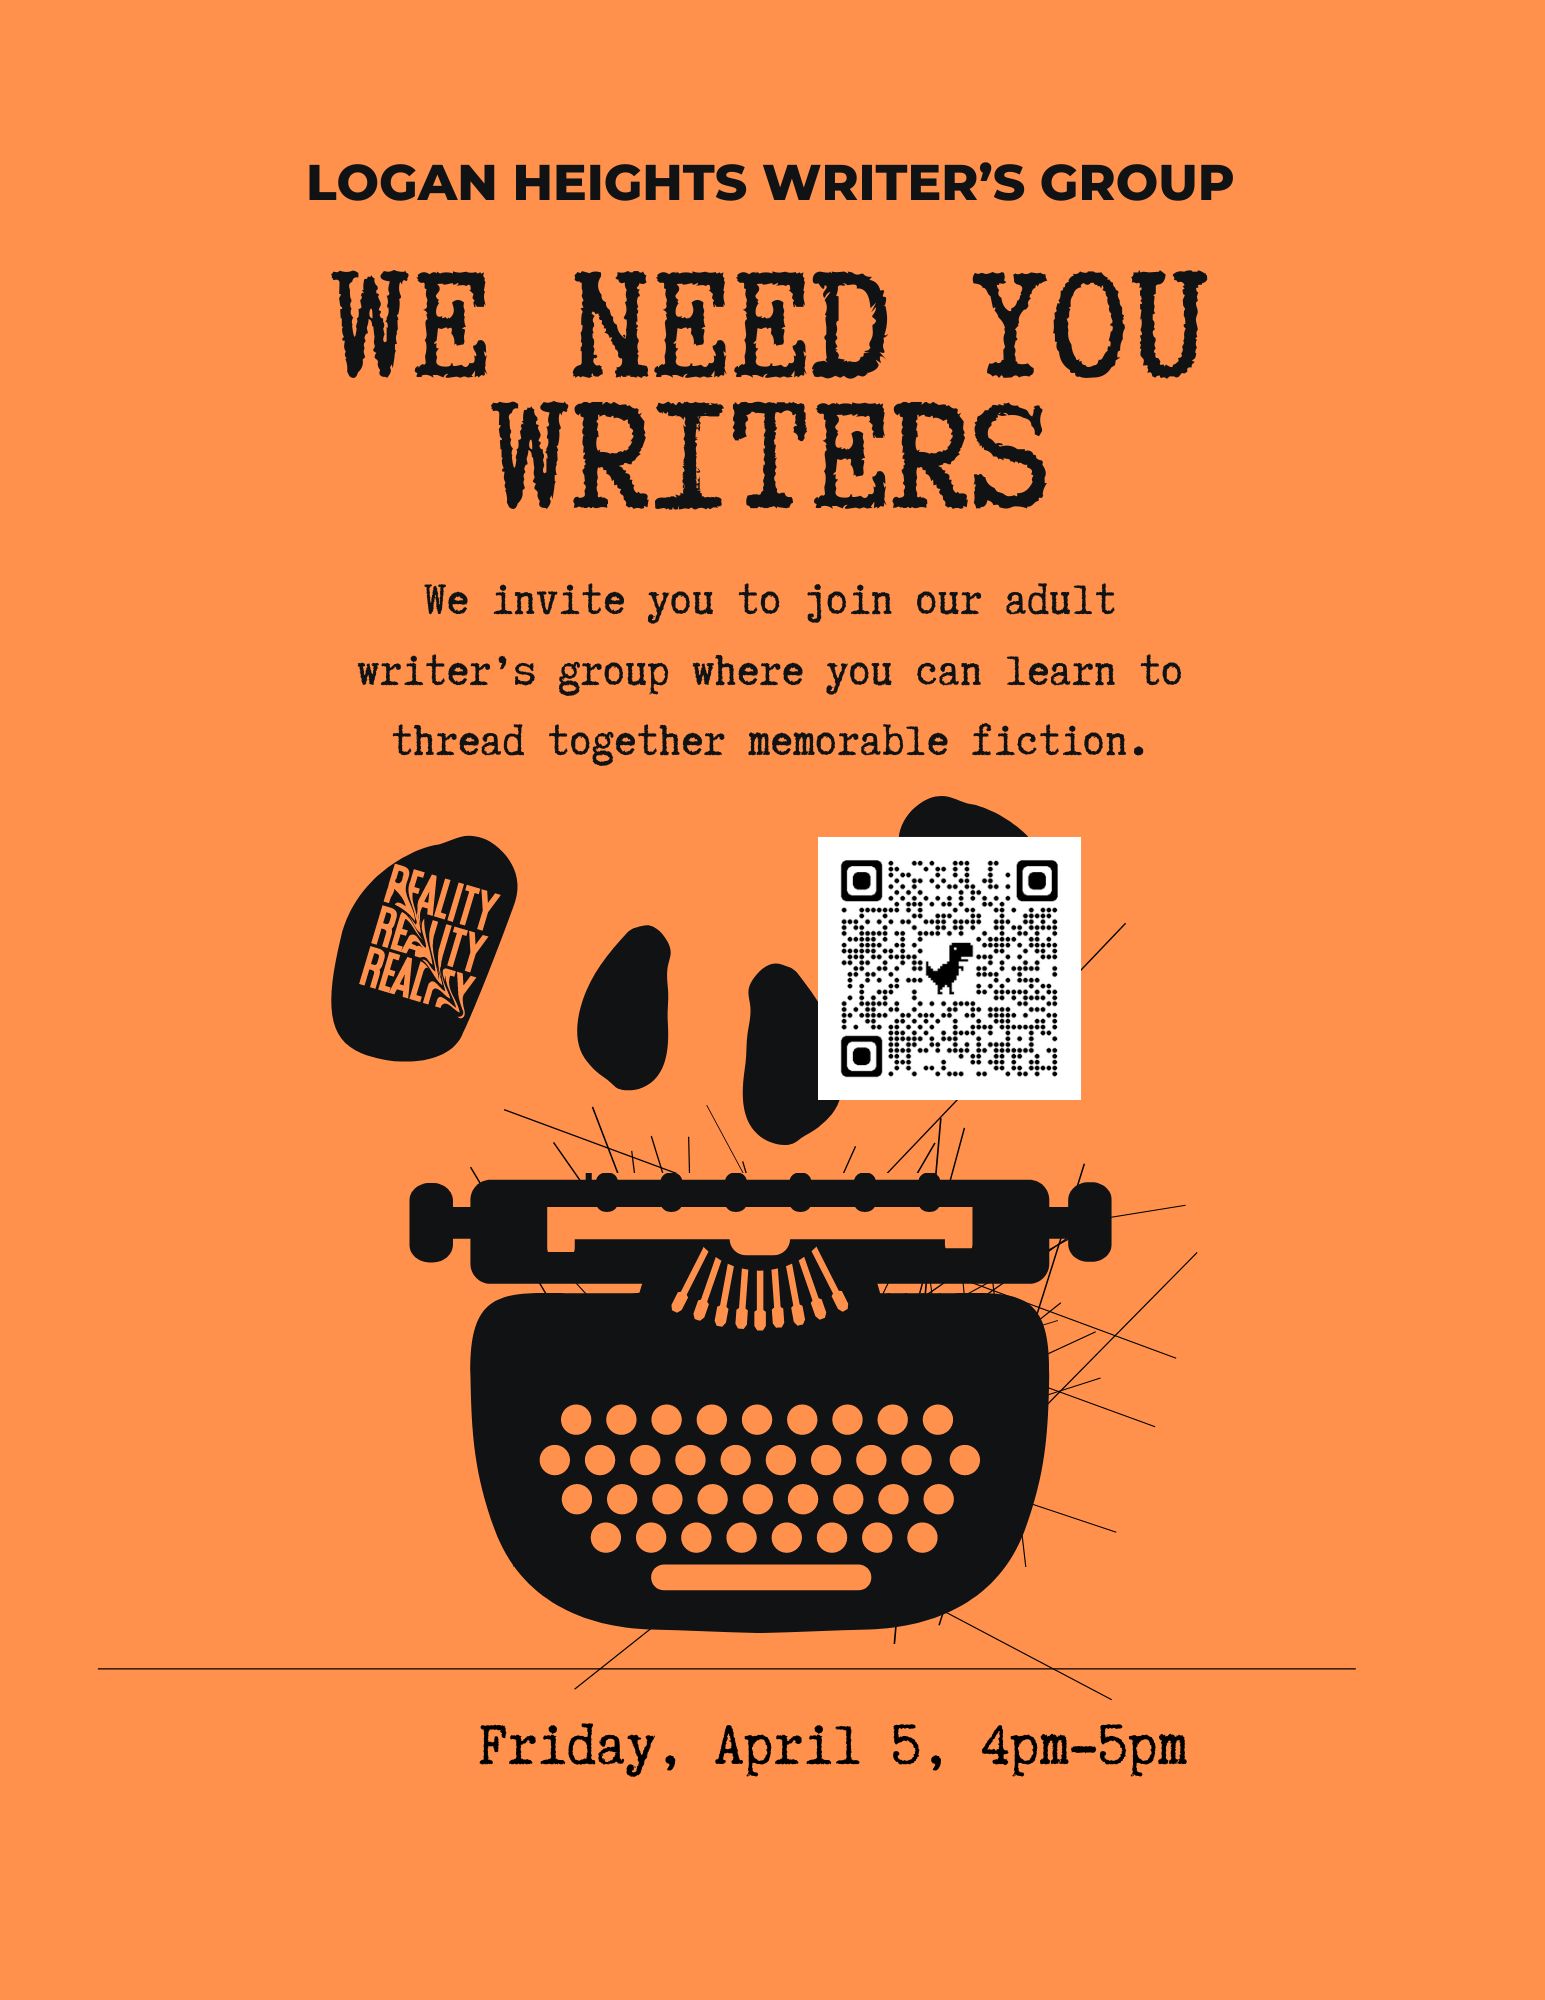 Black typewriter against orange background